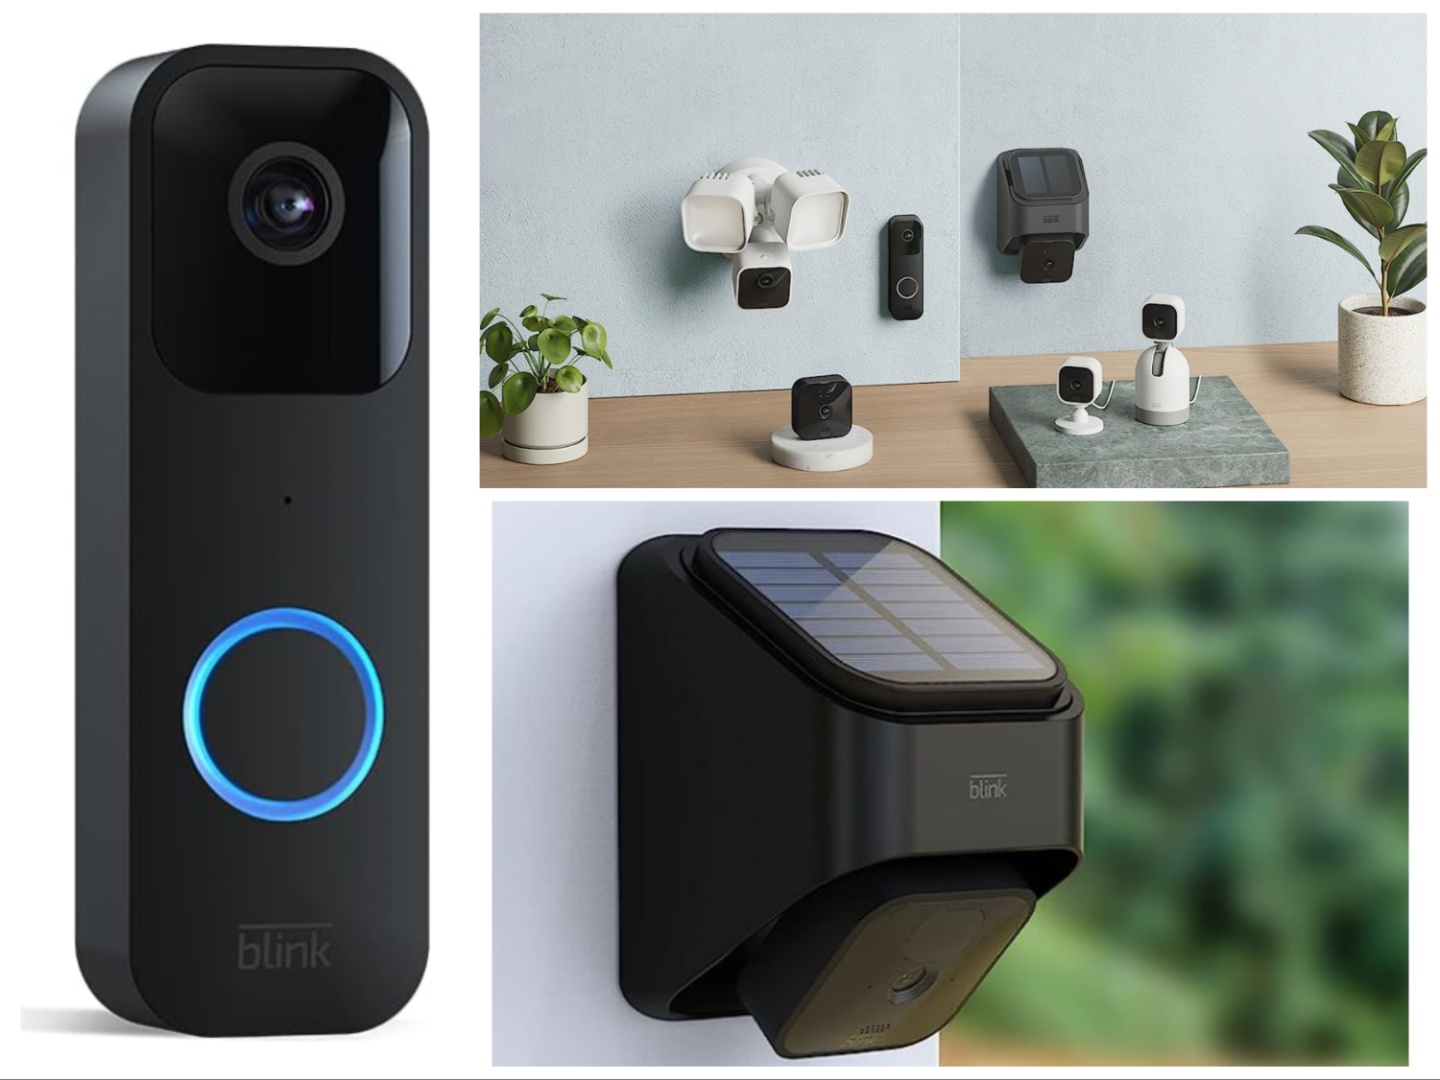 Best Prime Day security camera deal: Get 4 Blink Mini indoor cameras for  62% off